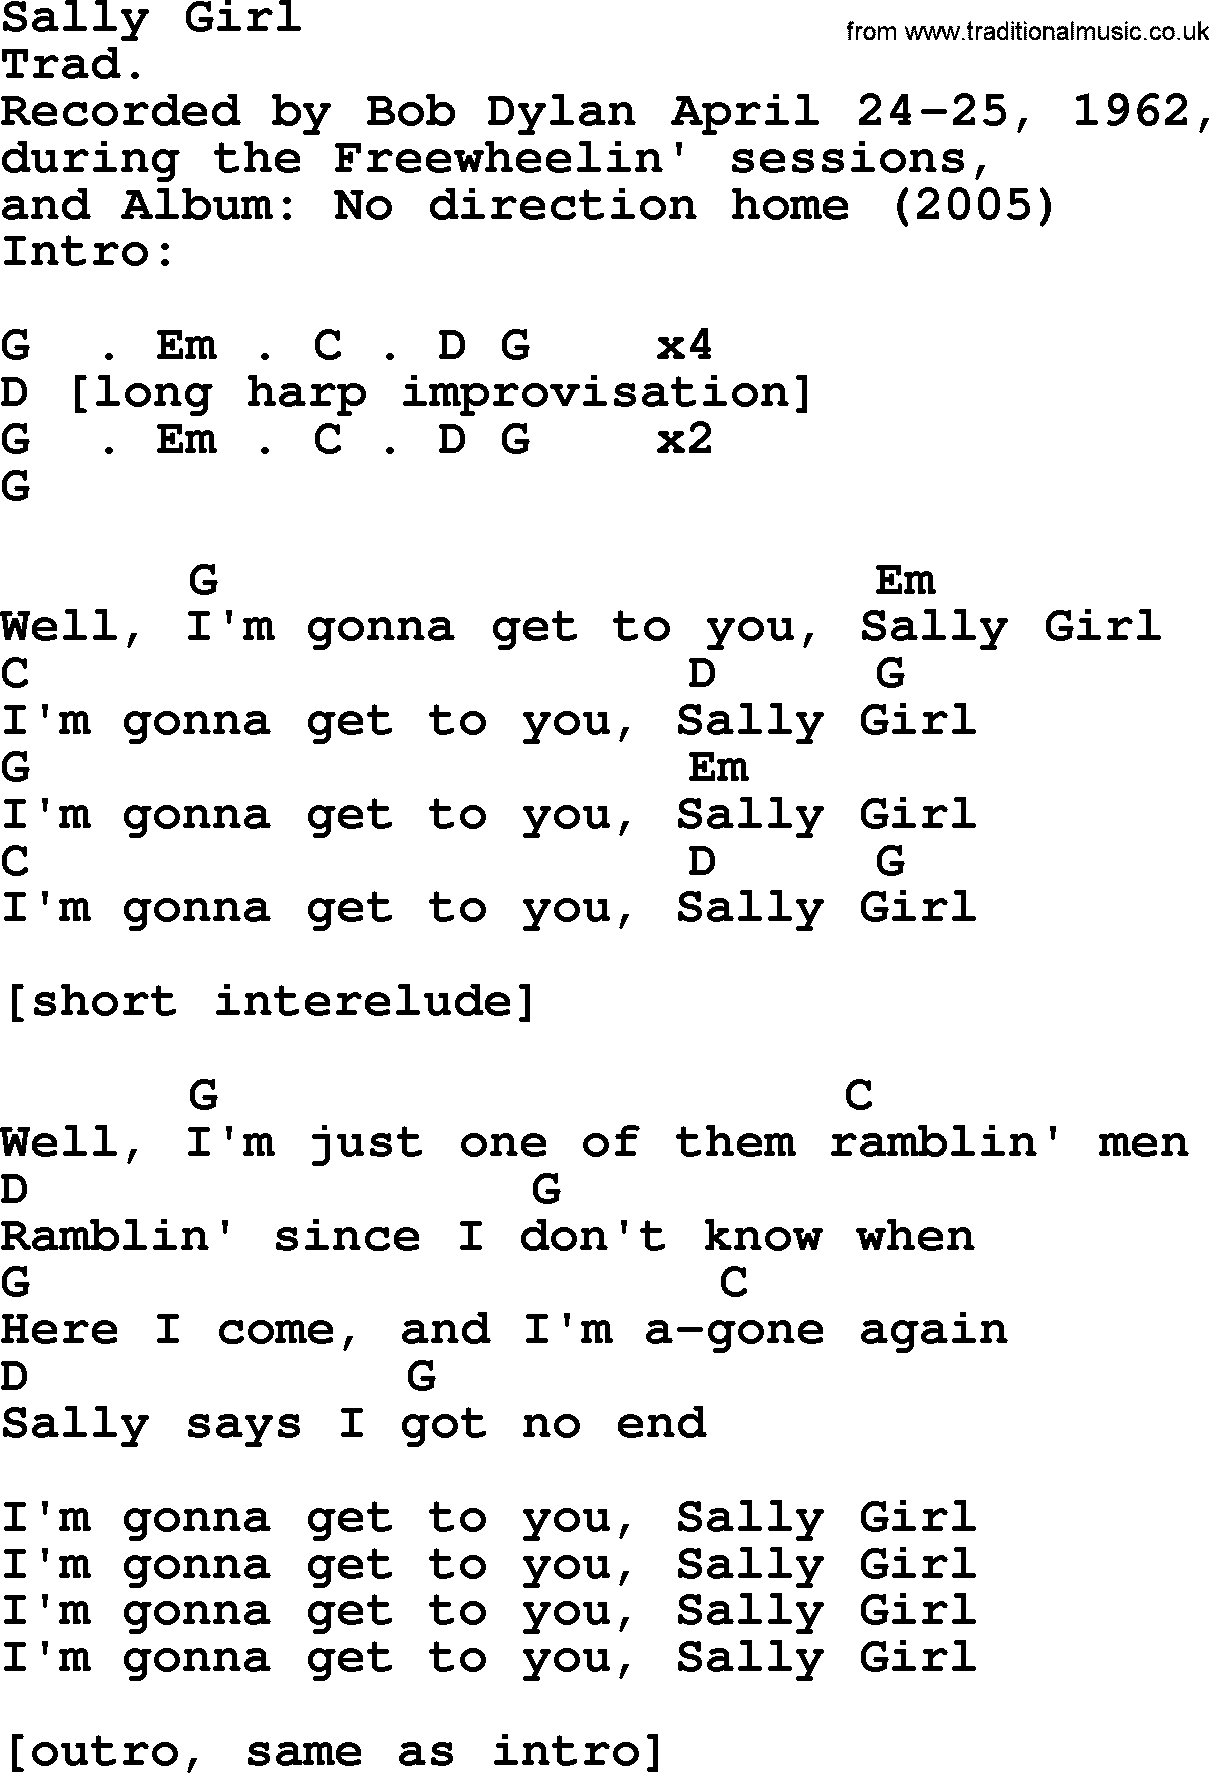 Bob Dylan song, lyrics with chords - Sally Girl